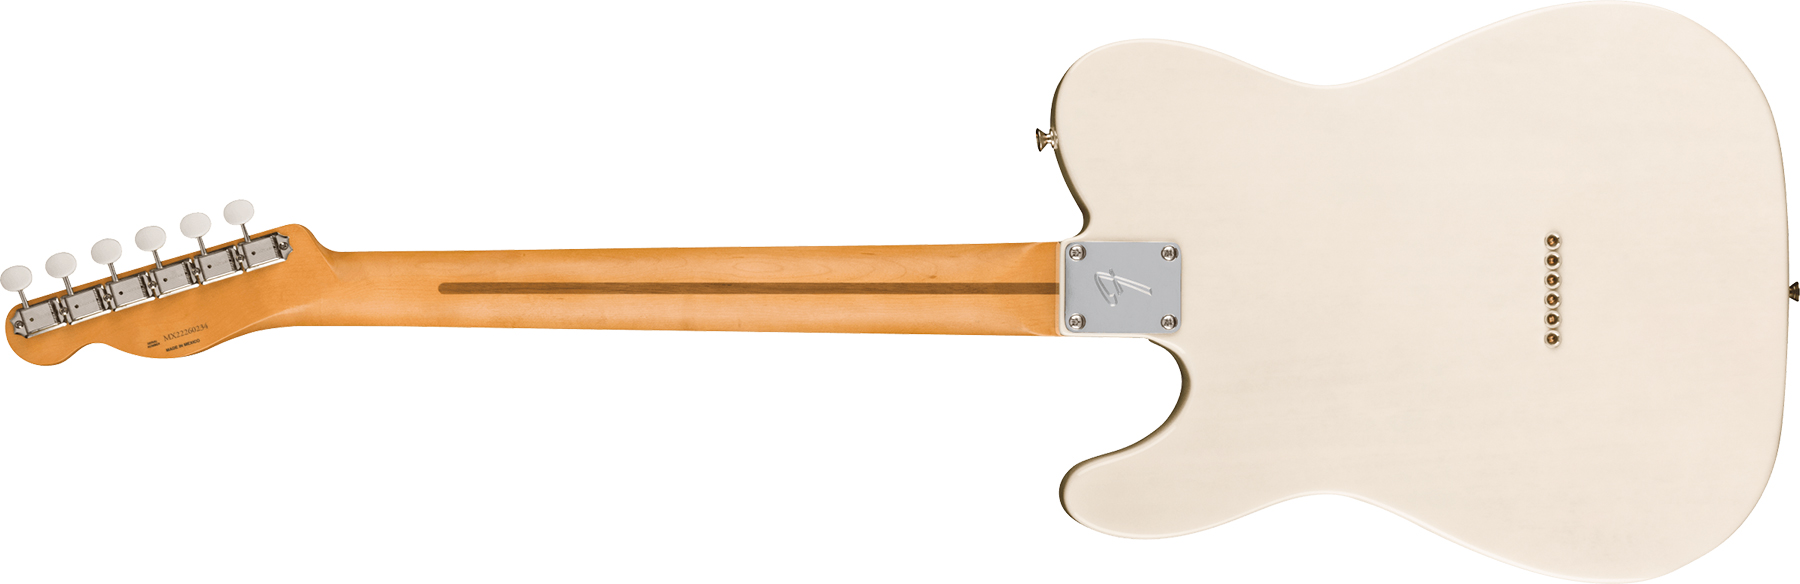 Fender Tele Gold Foil Ltd Mex 2mh Ht Eb - White Blonde - Tel shape electric guitar - Variation 1